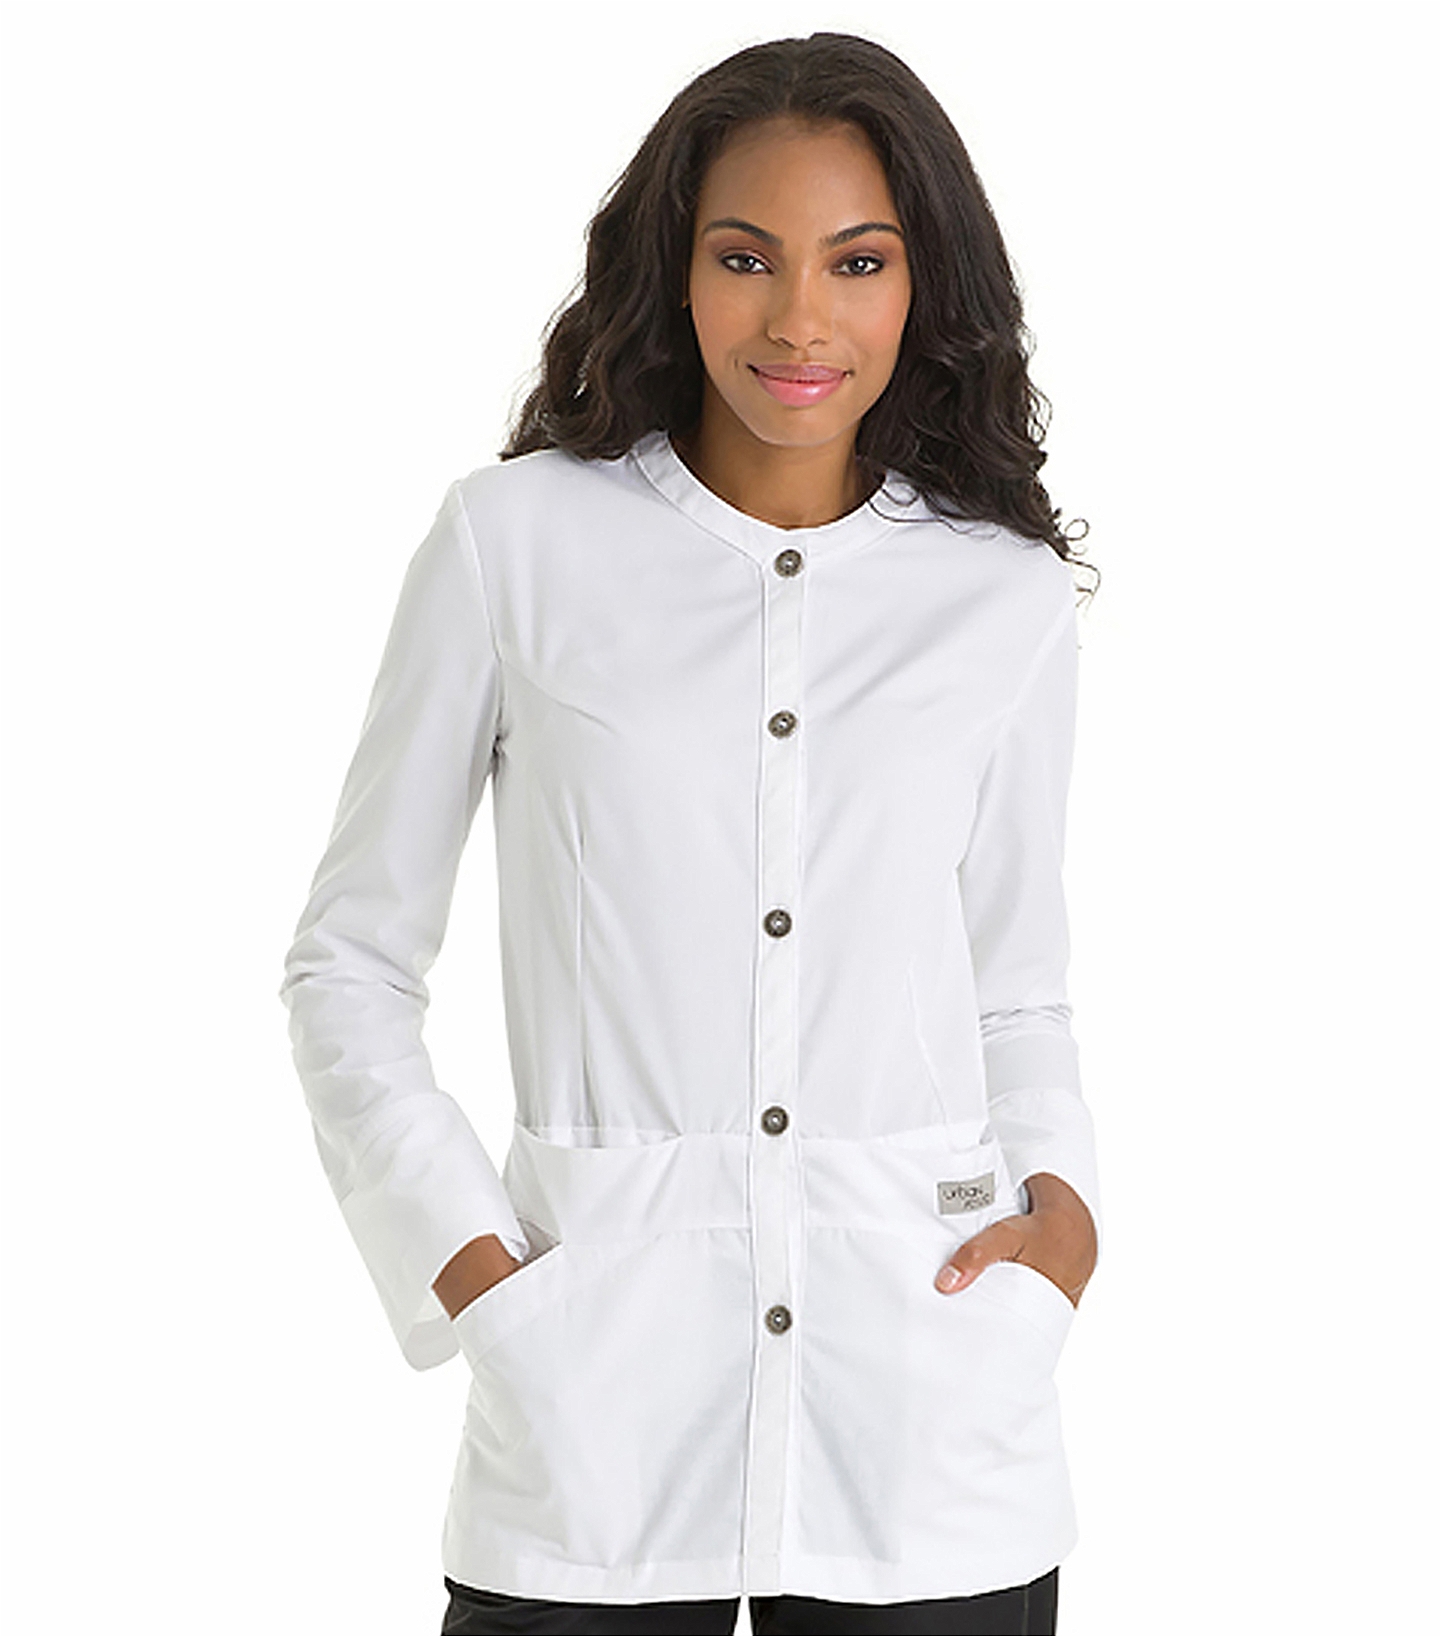 Urbane Women's Button Front White Lab Jacket-9607